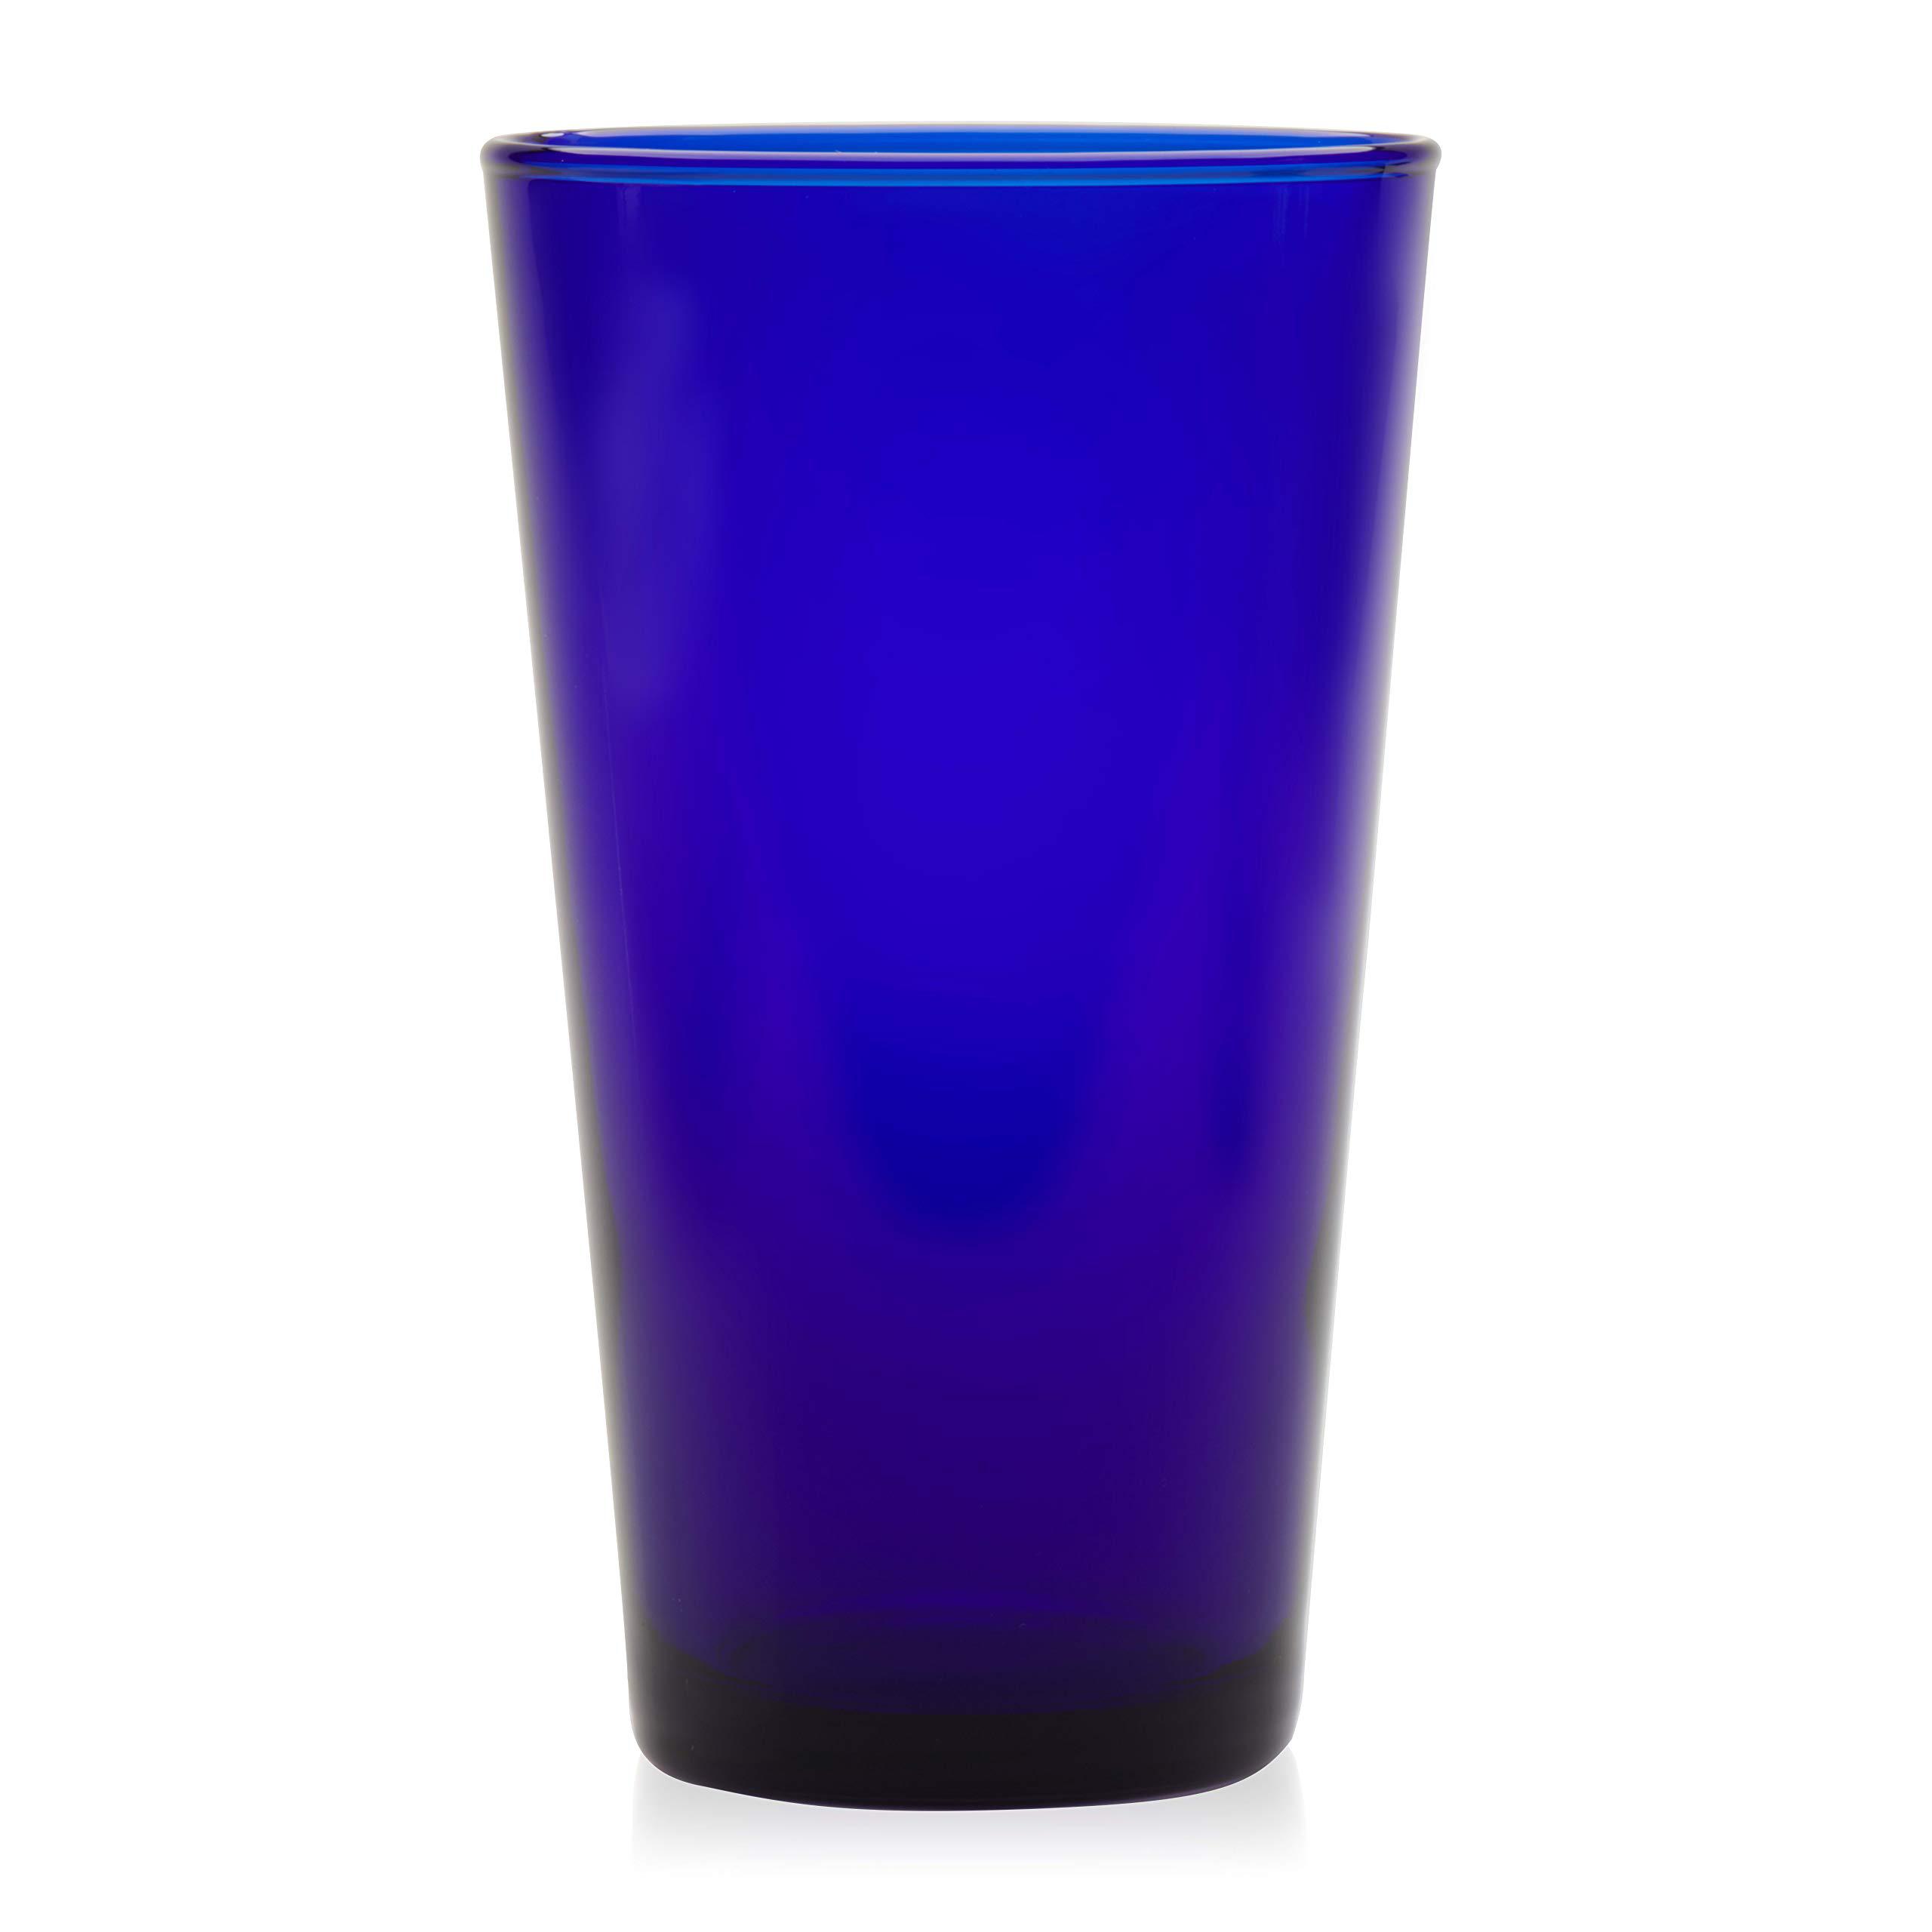 libbey cobalt flare tumbler glasses, 17.25-ounce, set of 8